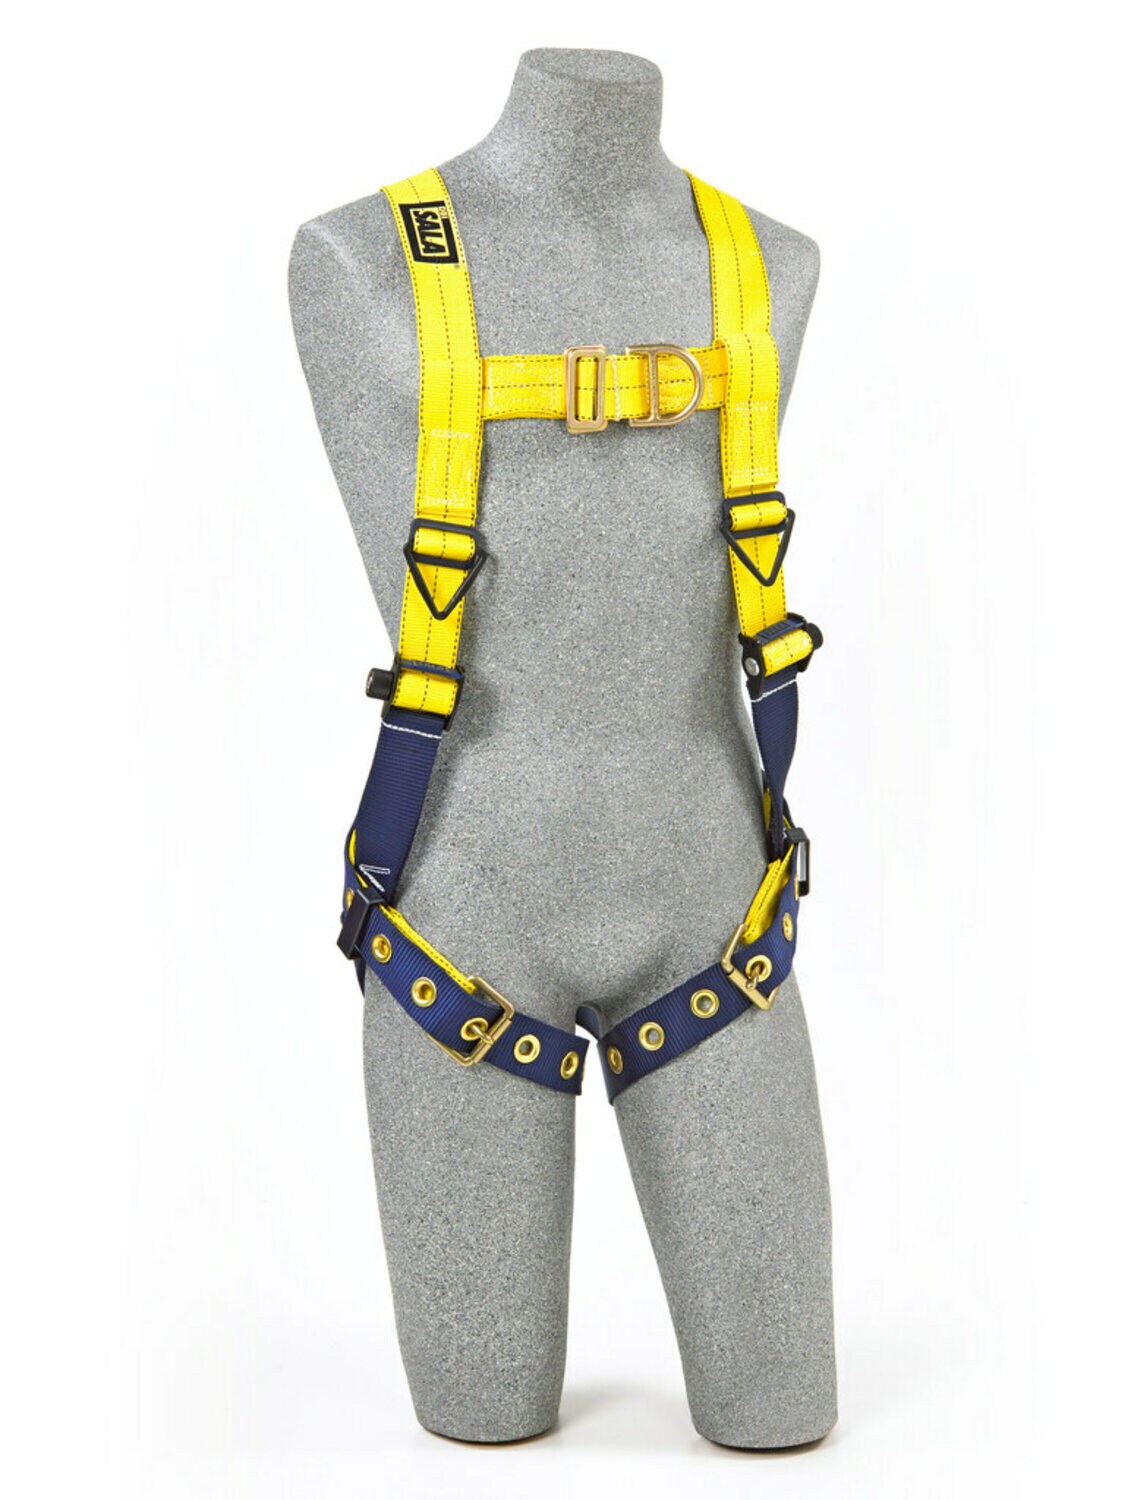 7012815623 - 3M DBI-SALA Delta Vest Climbing Safety Harness 1107815, 3X